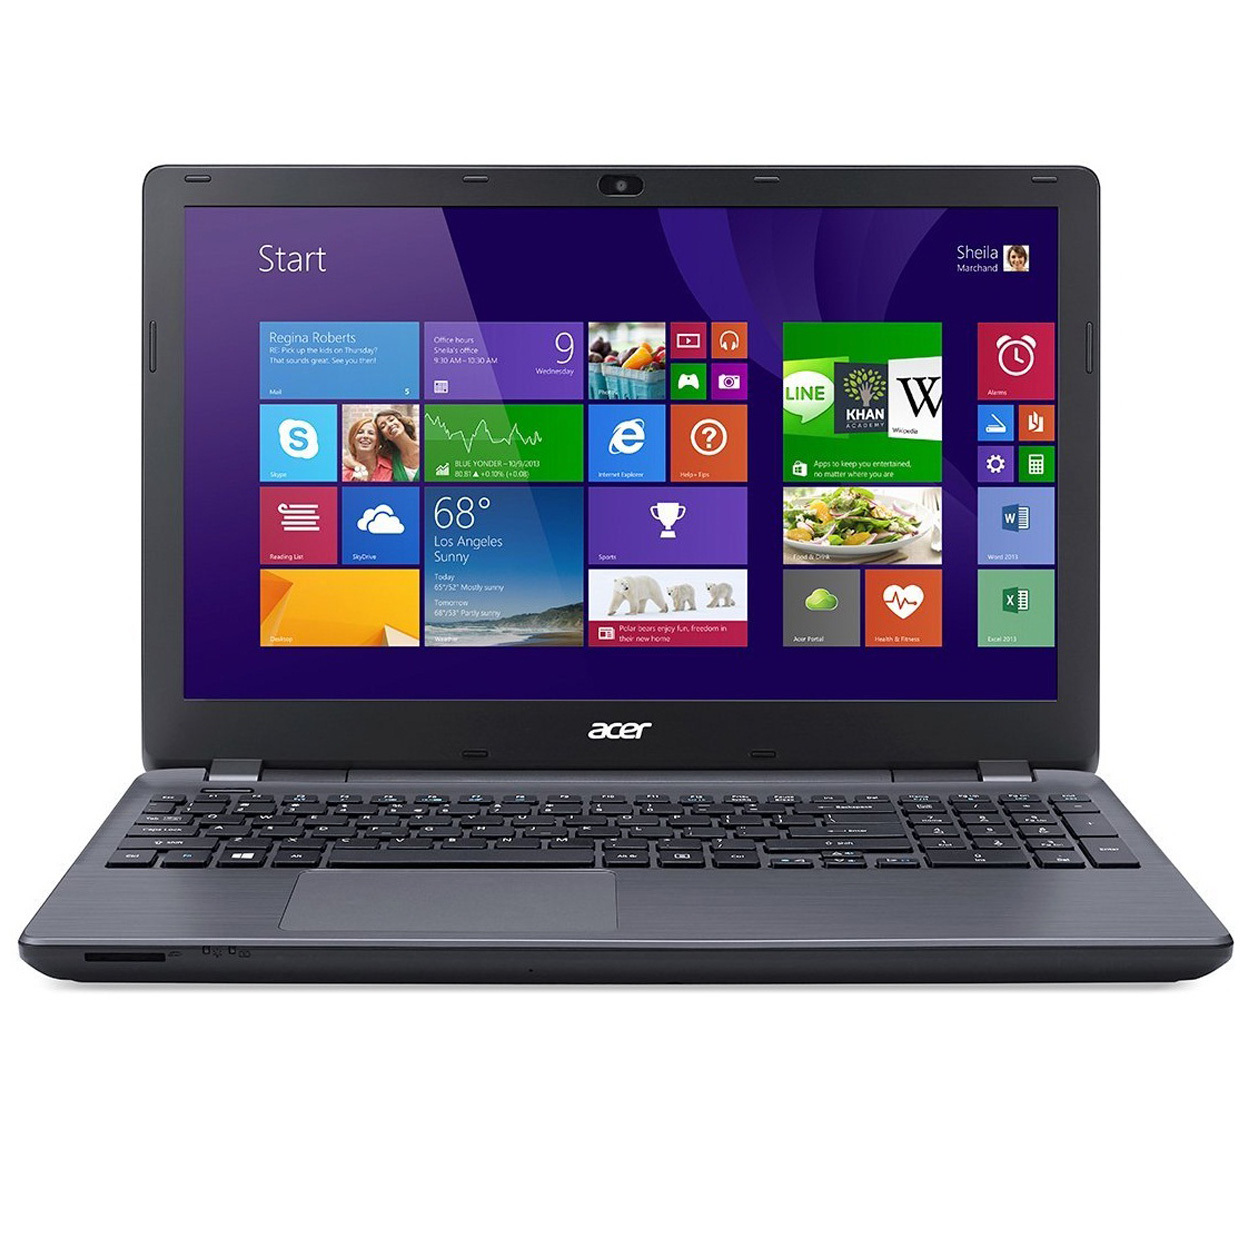 Laptop Acer E5 573 34DD (NX.MVHSV.004) - Intel Broadwell Core i3 5005U, RAM 4GB, HDD 500GB, Intel HD Graphics 5500, 15.6 inch